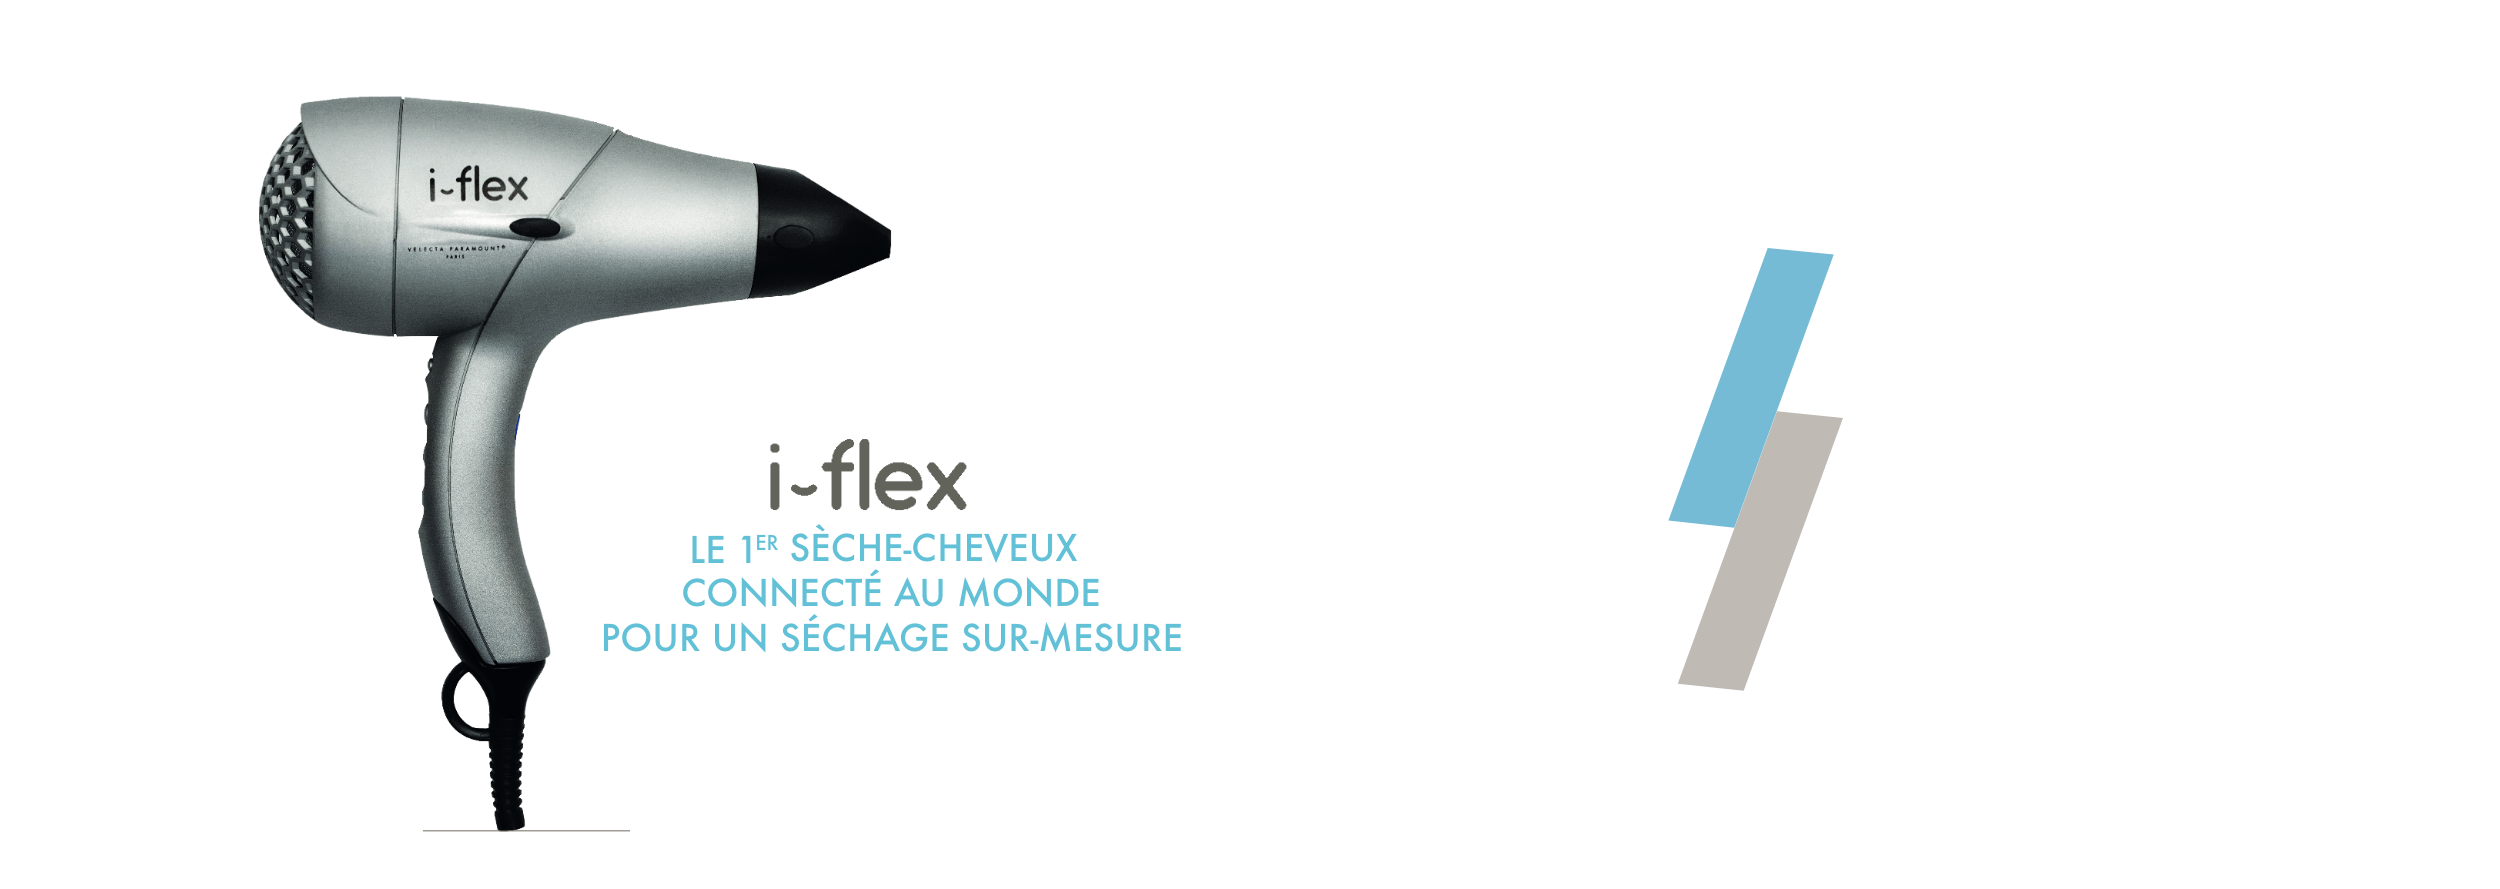 image-iflex2-velecta-paramount-agence-conseil-en-communication-Letb-synergie